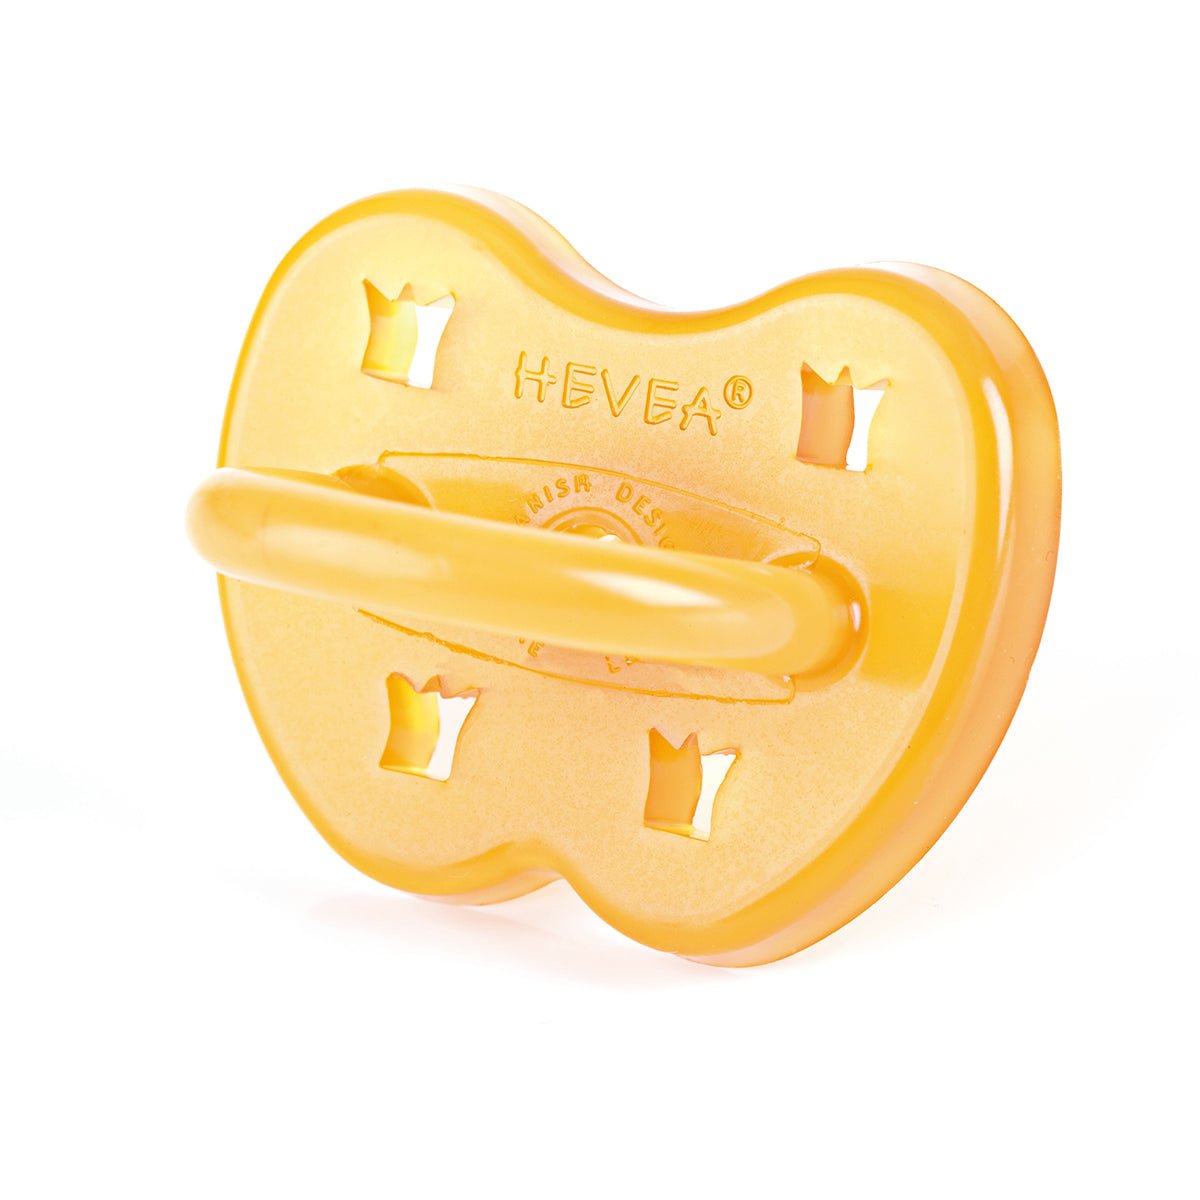 Hevea Pacifier Classic Crown 0-3 | Hevea